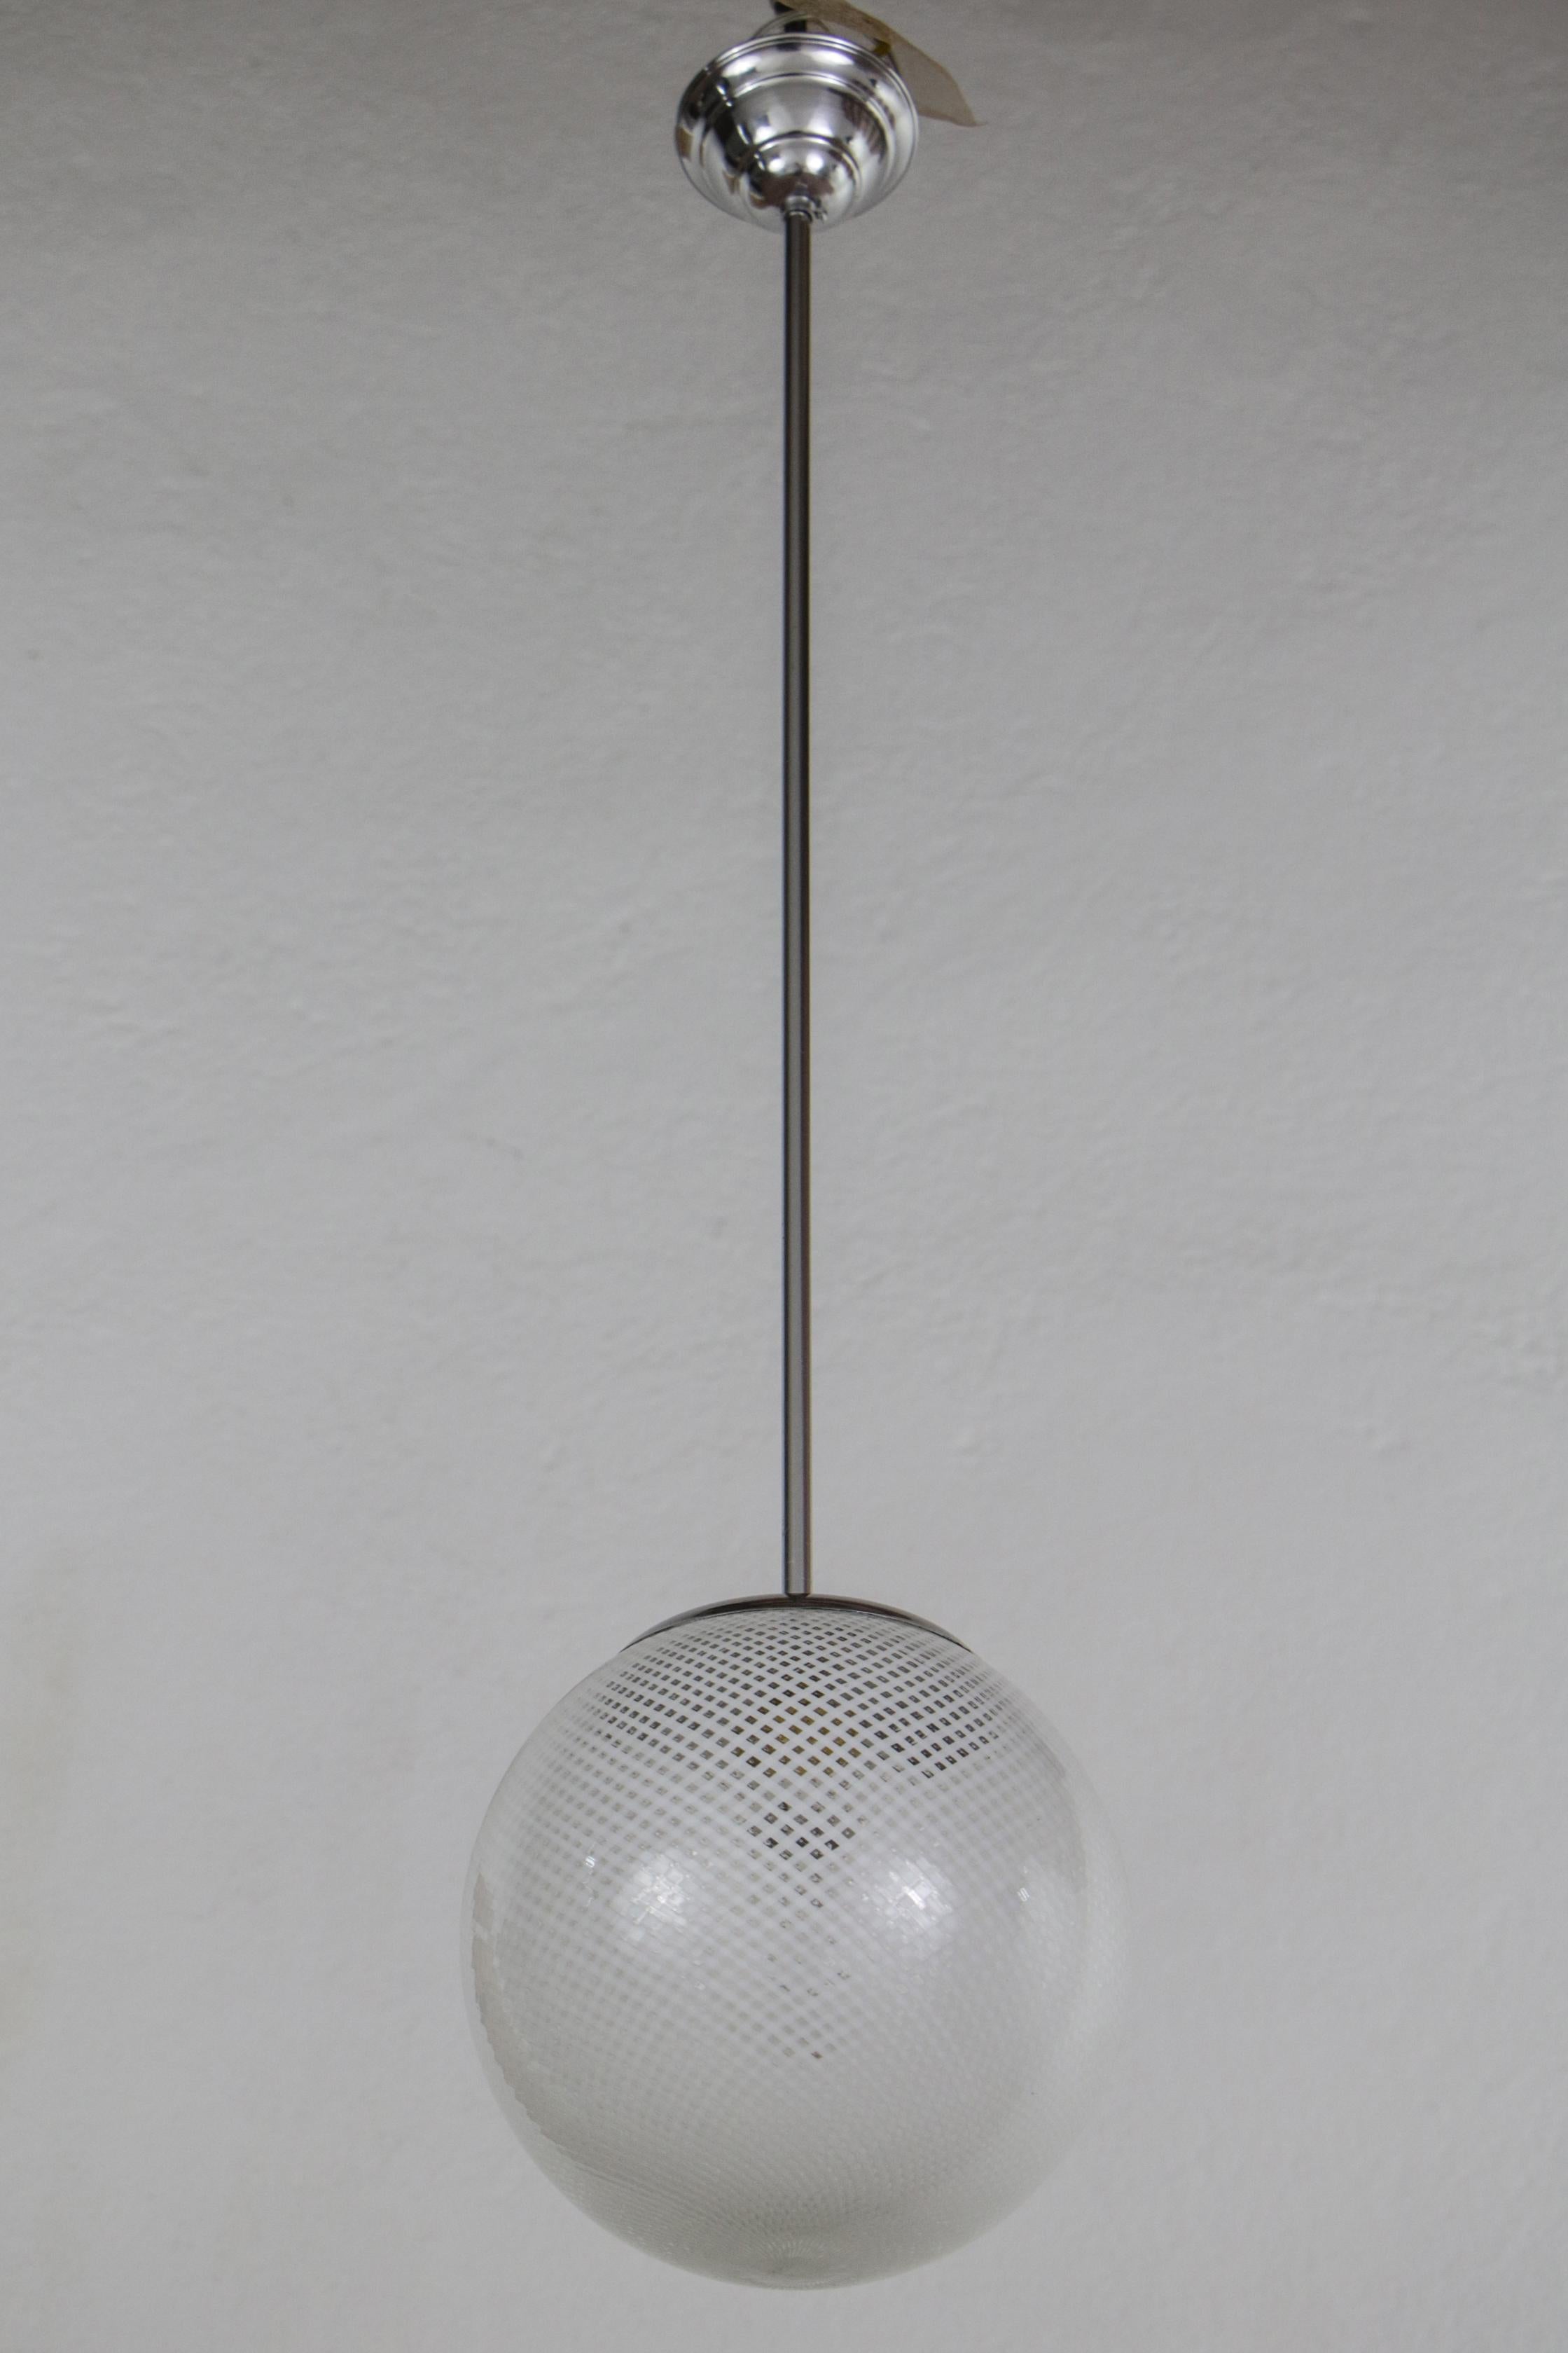 Mid-20th Century Italian Midcentury Murano Glass Pendant Lamp by Carlo Scarpa for Venini, 1940s